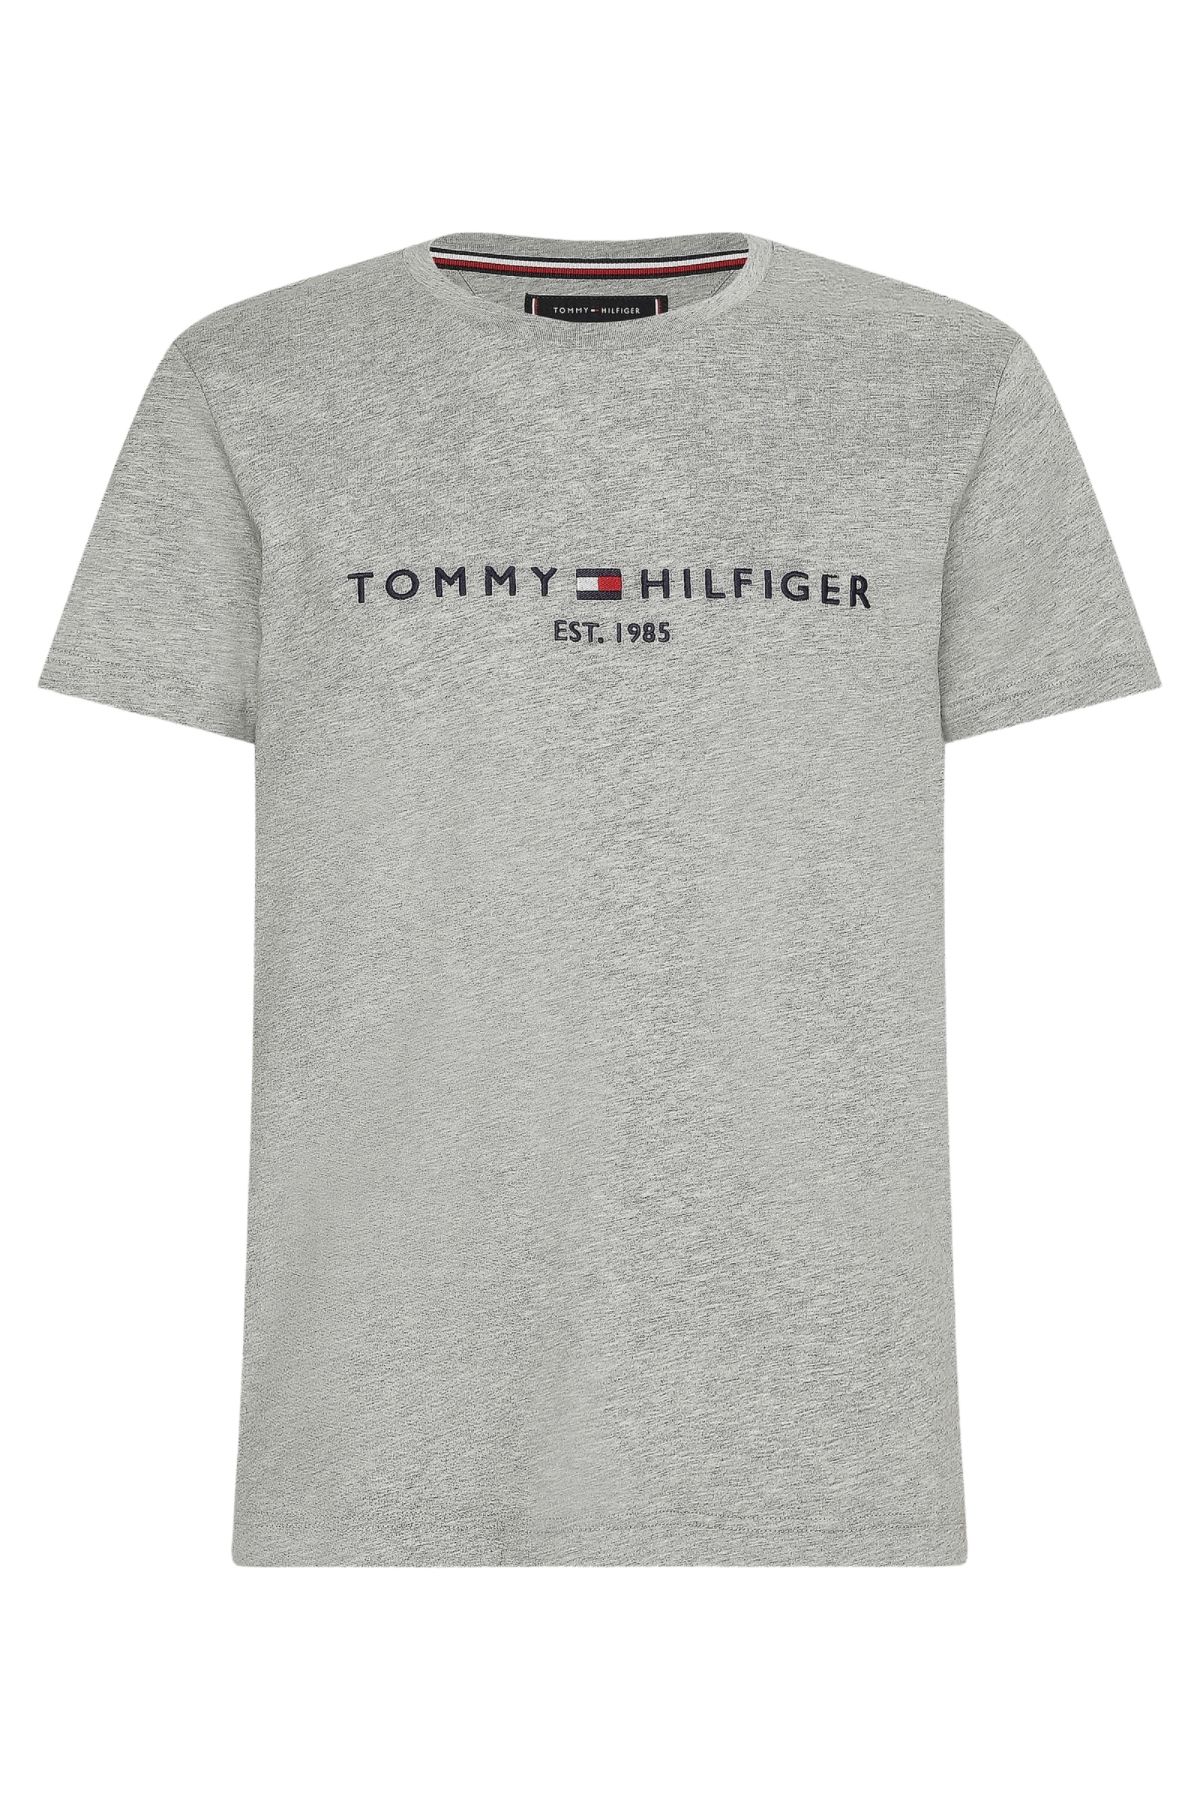 Tommy Hilfiger Erkek Marka Logolu Gündelik Kullanıma Uygun Organik Pamuklu Gri T-shirt Mw0mw11465501-gri